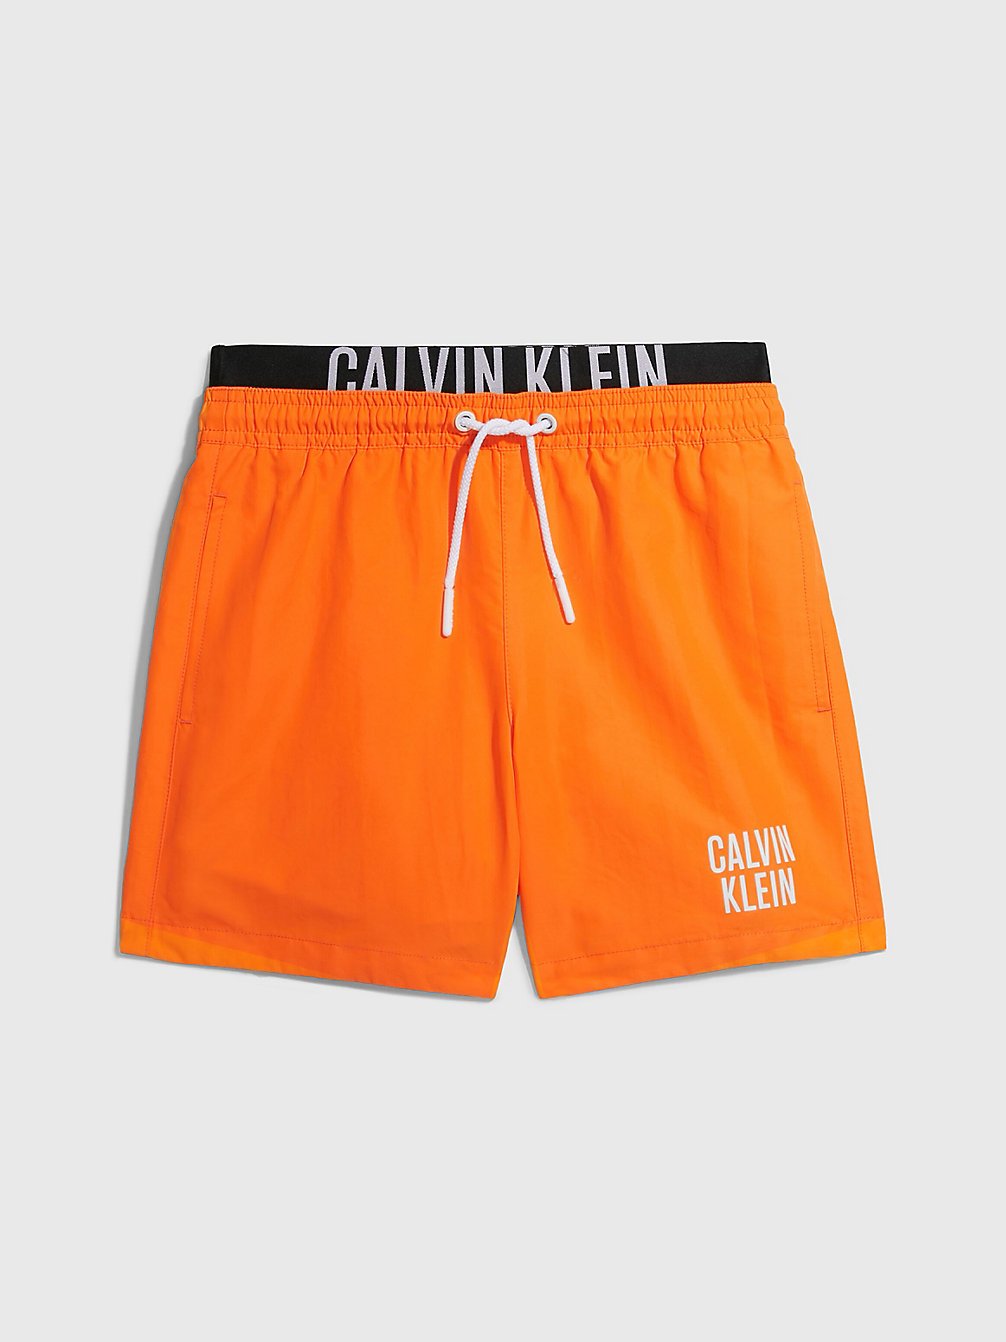 SUN KISSED ORANGE Short De Bain Pour Garçon - Intense Power undefined garcons Calvin Klein